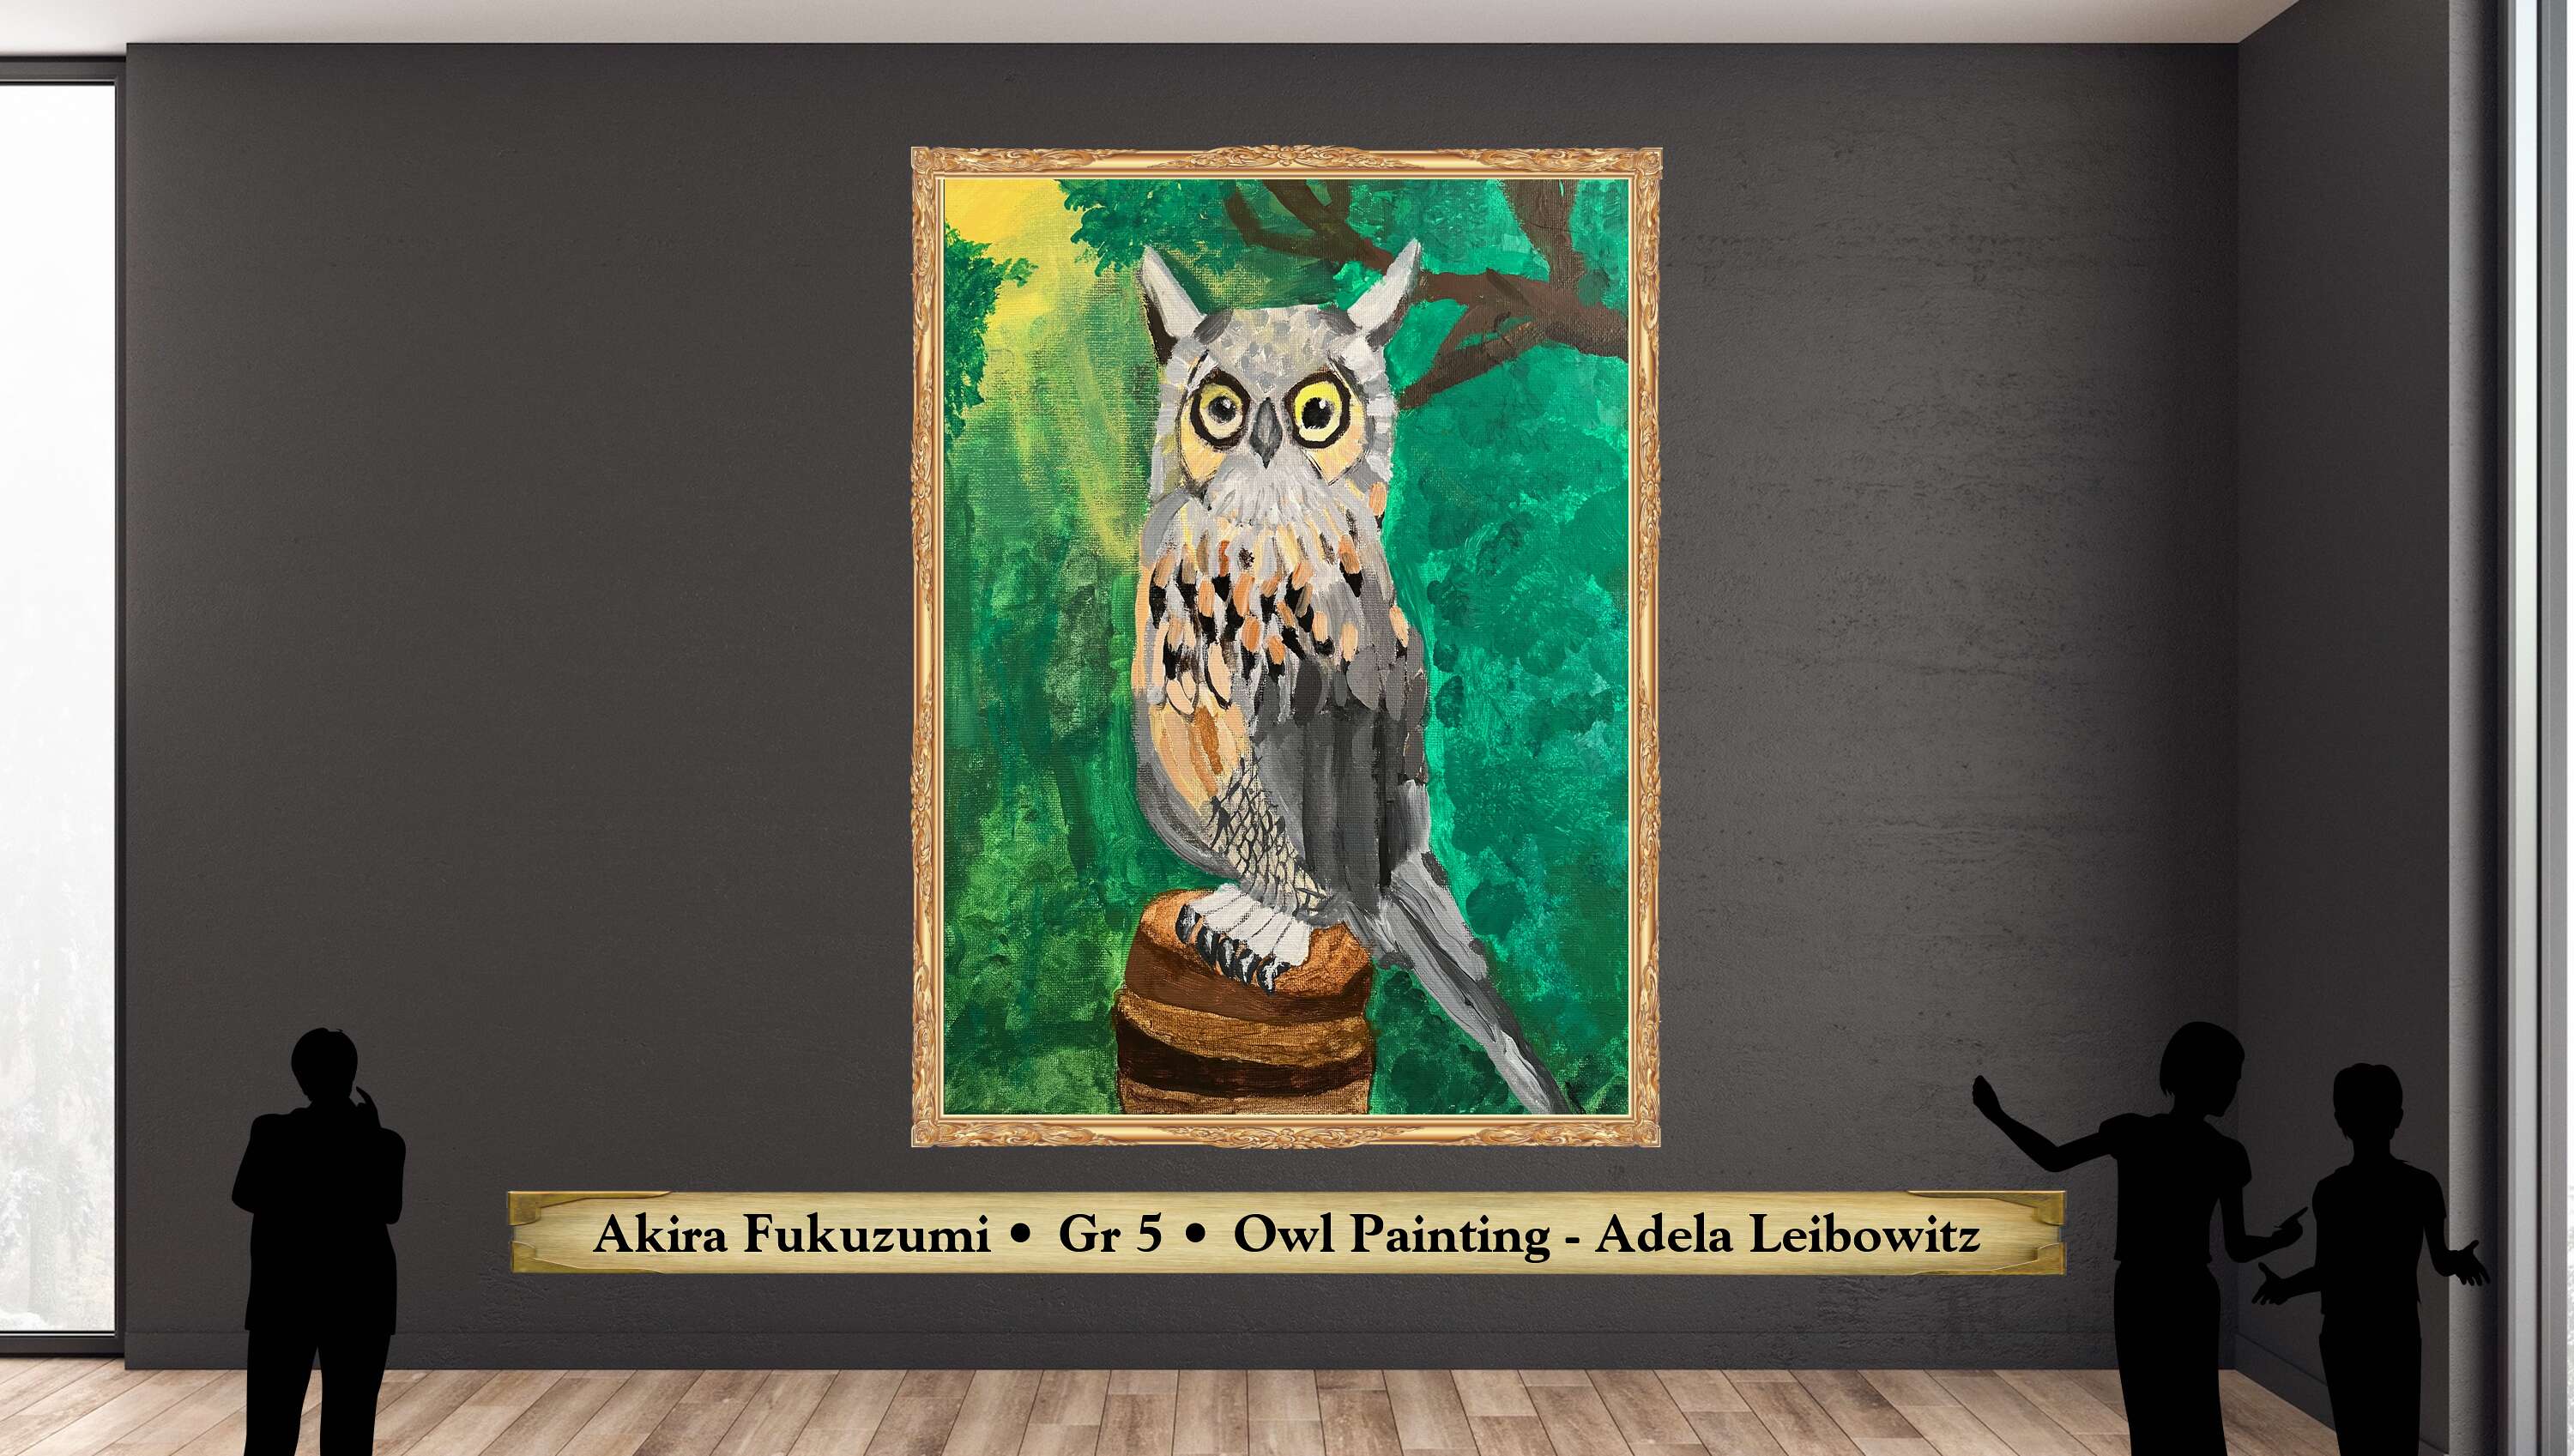 Akira Fukuzumi • Gr 5 • Owl Painting - Adela Leibowitz